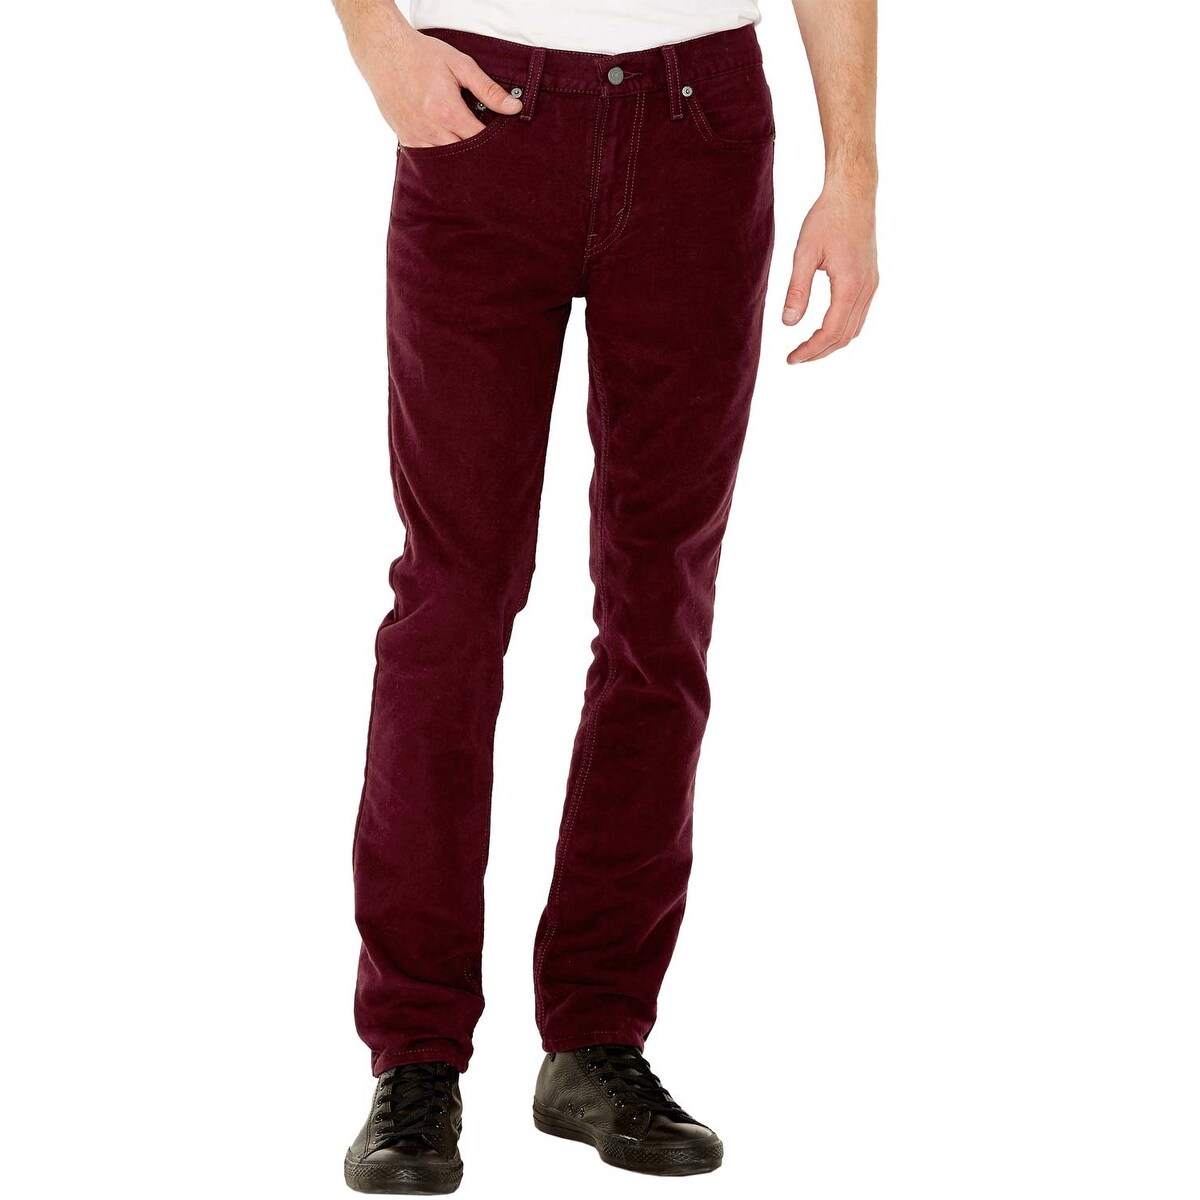 levis 511 burgundy jeans